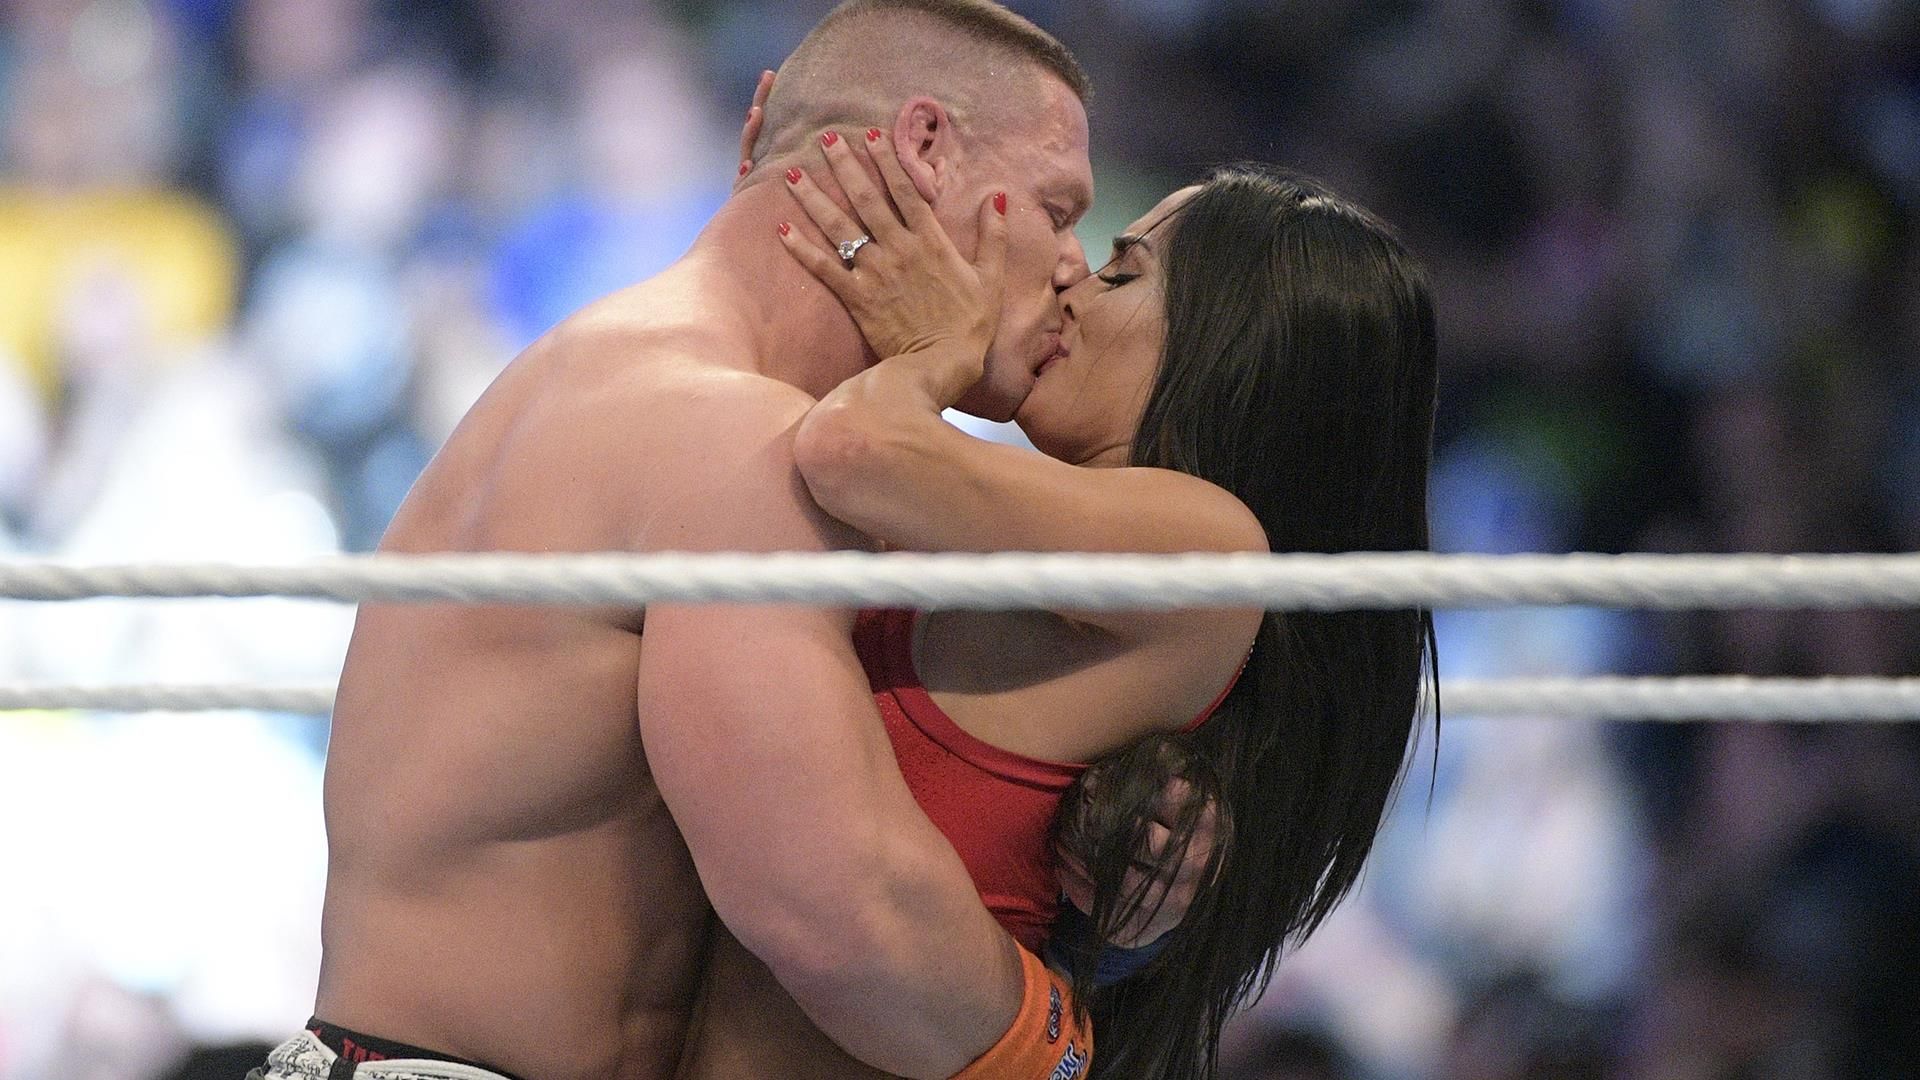 John Cena pops the question to Nikki Bella at WrestleMania 33